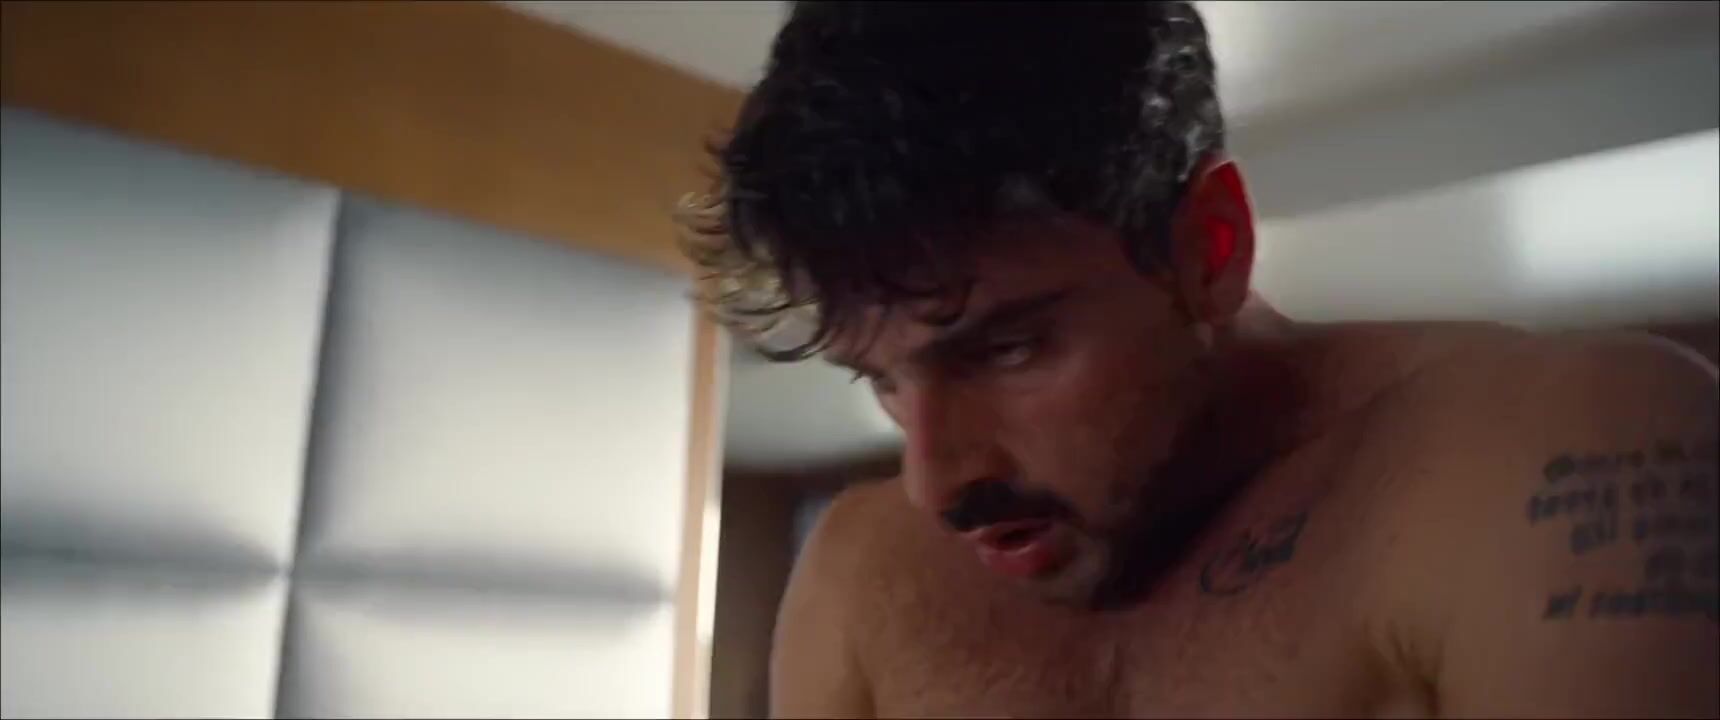 Titjob Girl is banged in explicit sex scene from erotic Polish movie 365 dni (2020) Para - 2